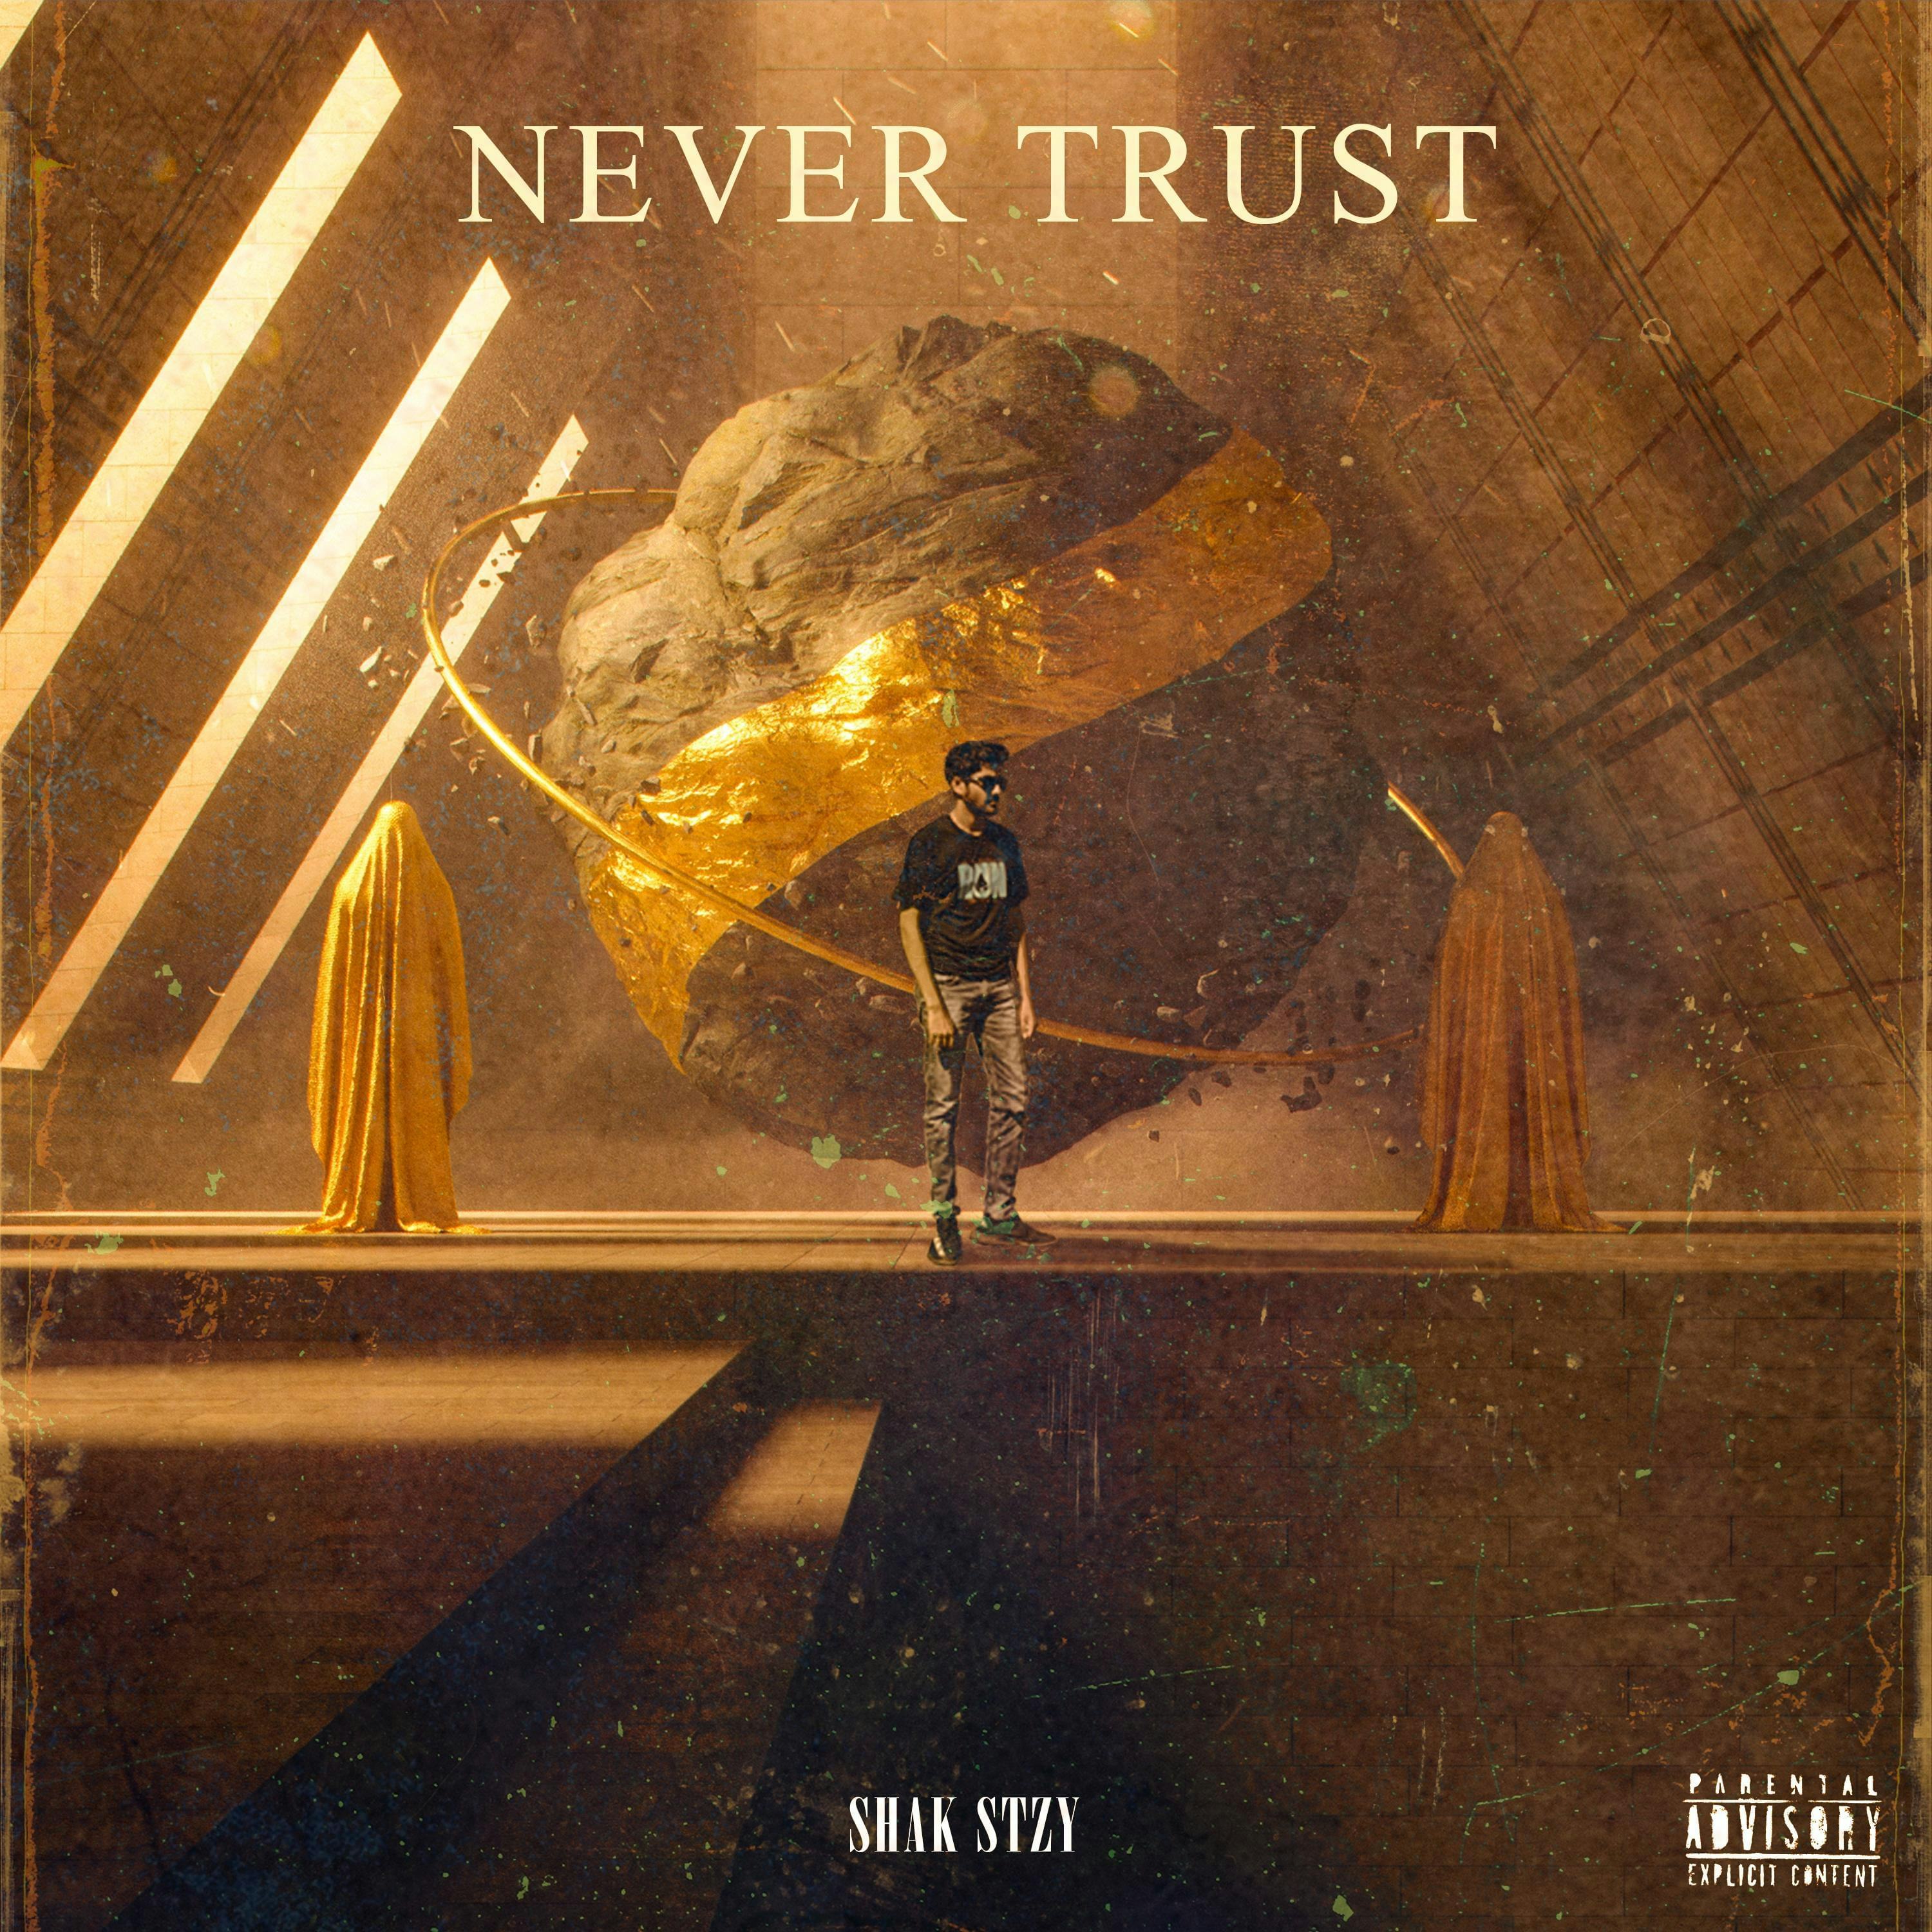 Cover art for Never Trust by Shak